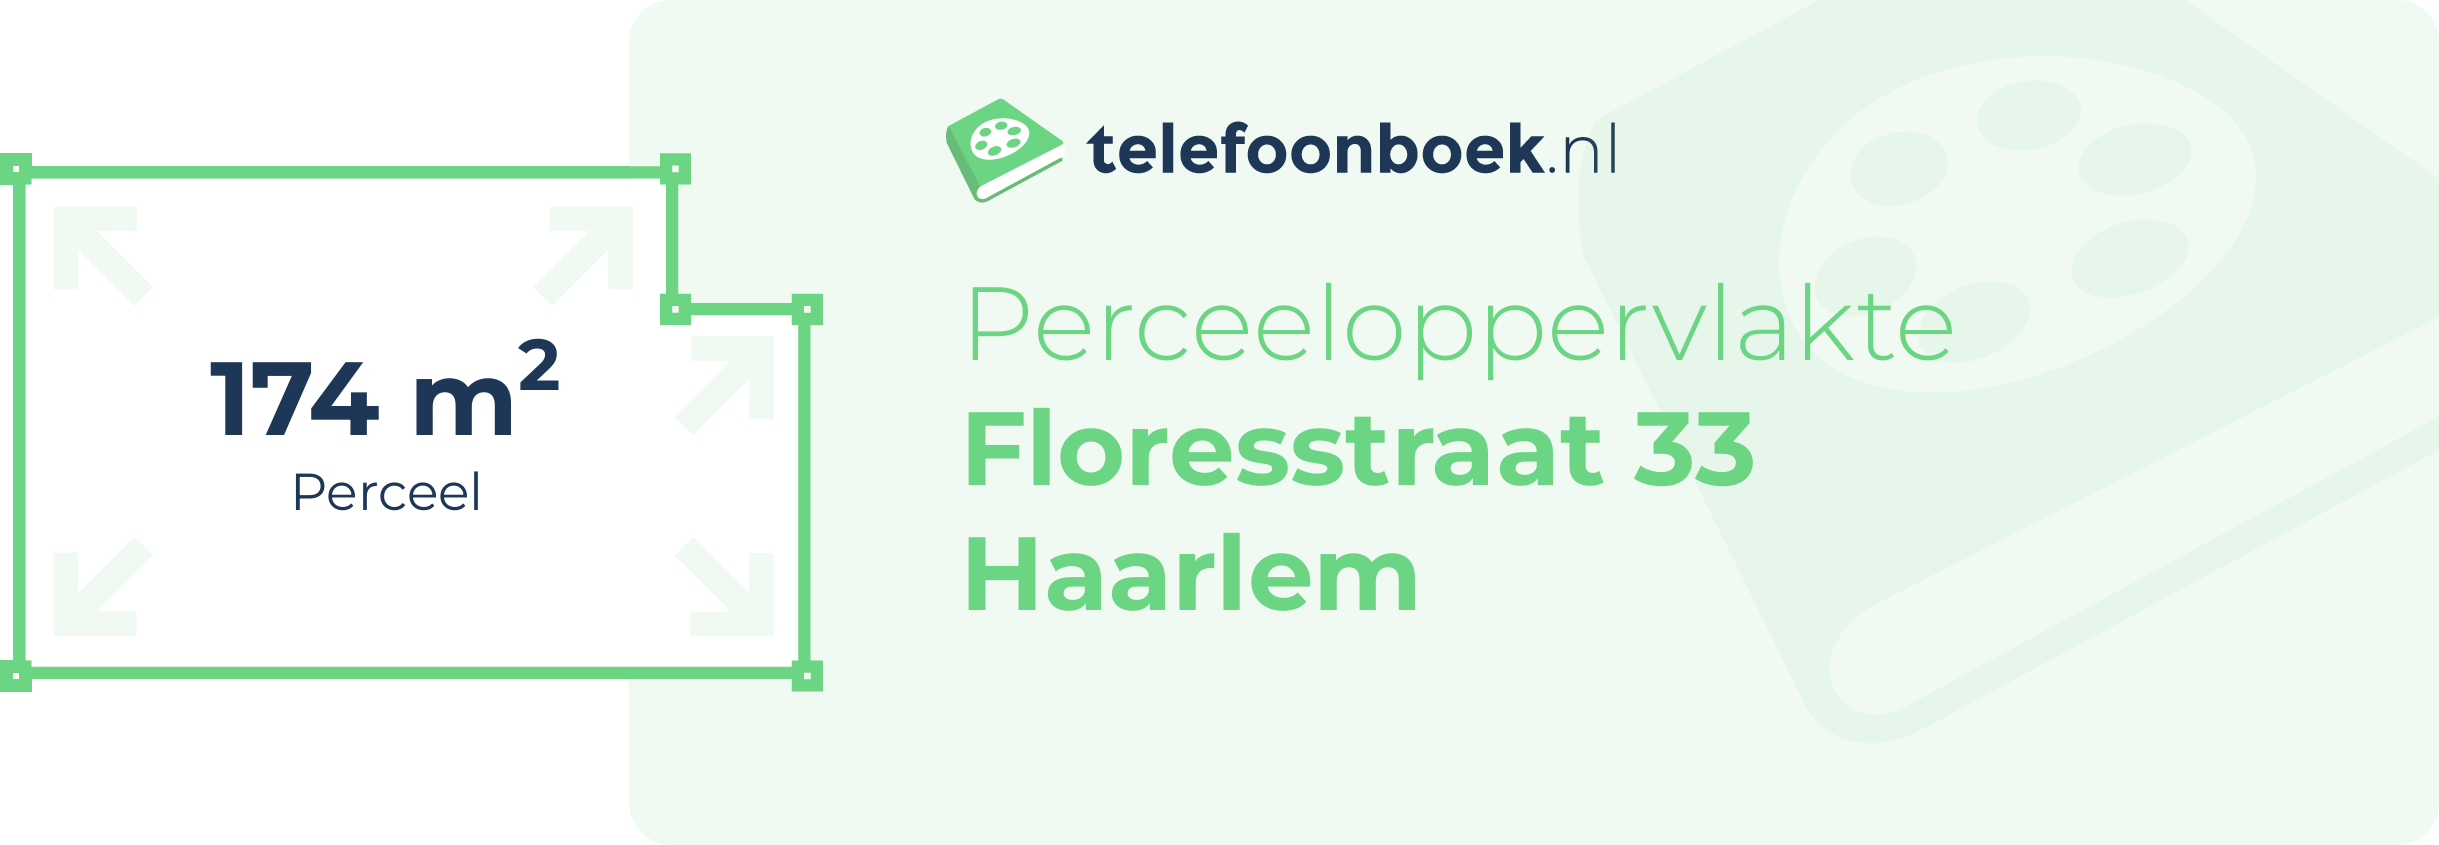 Perceeloppervlakte Floresstraat 33 Haarlem